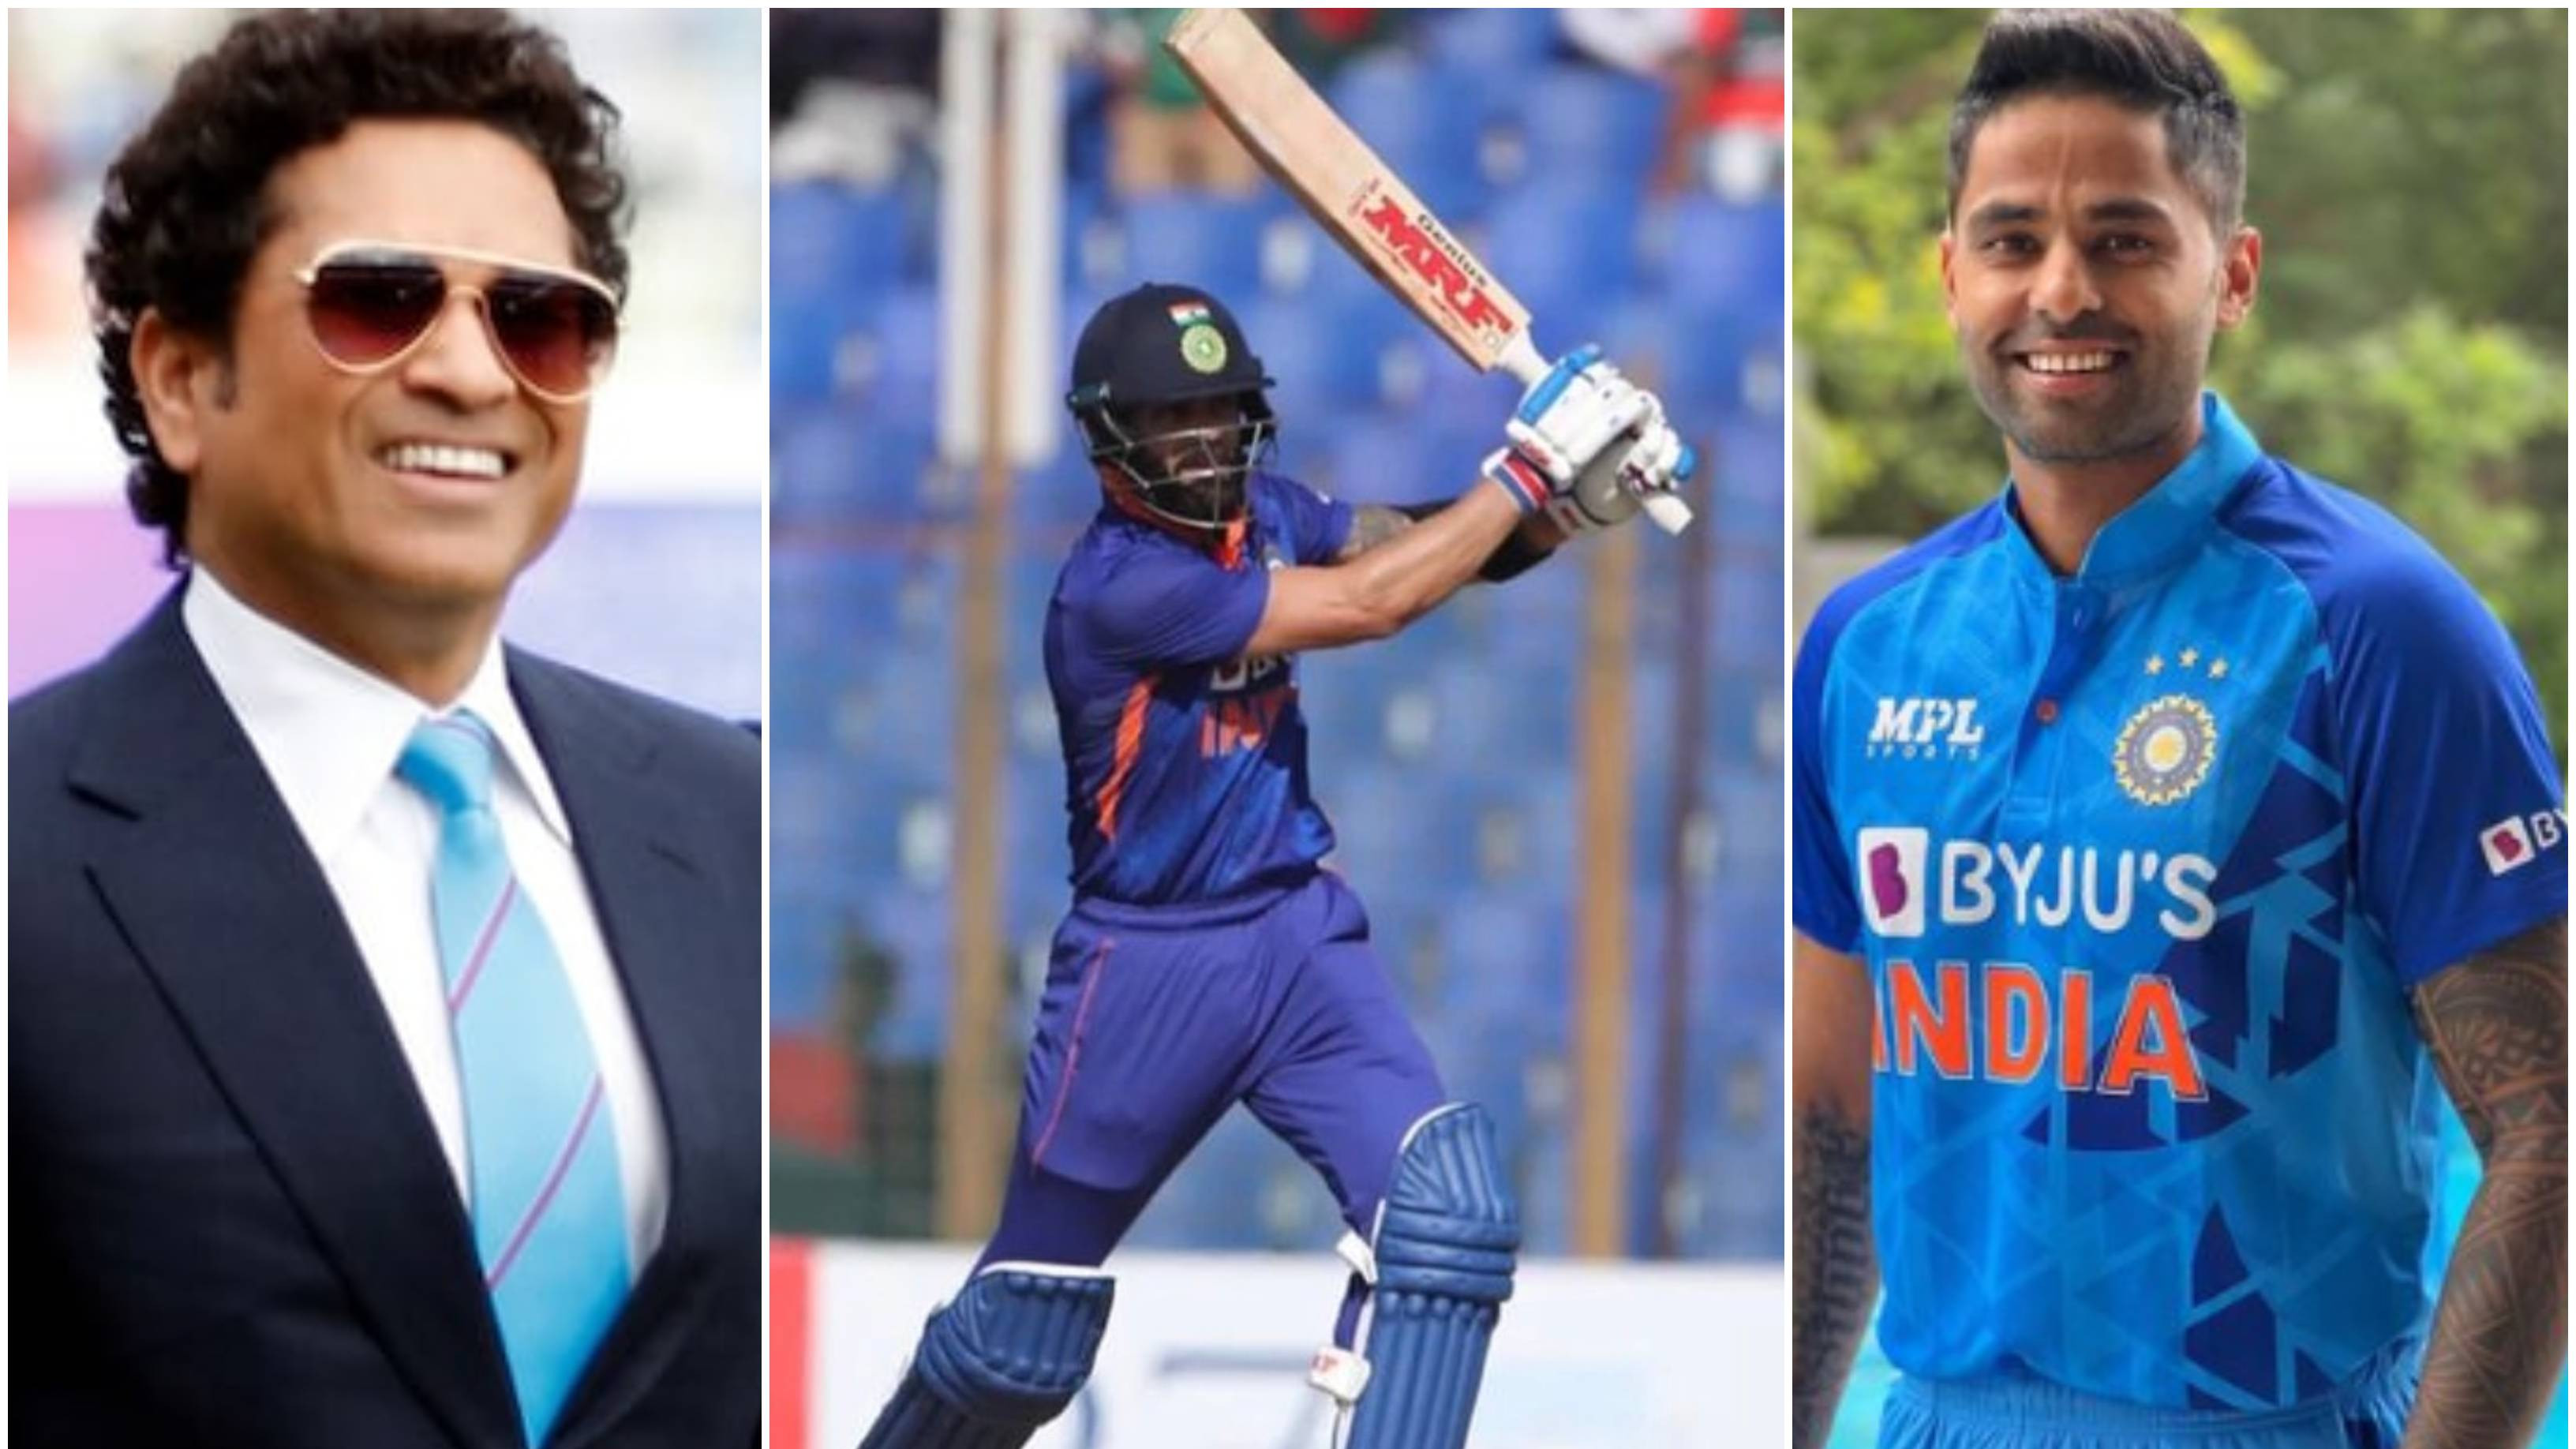 BAN v IND 2022: Cricket fraternity lauds Virat Kohli as he slams 44th ODI century, goes past Ponting’s tally of international tons